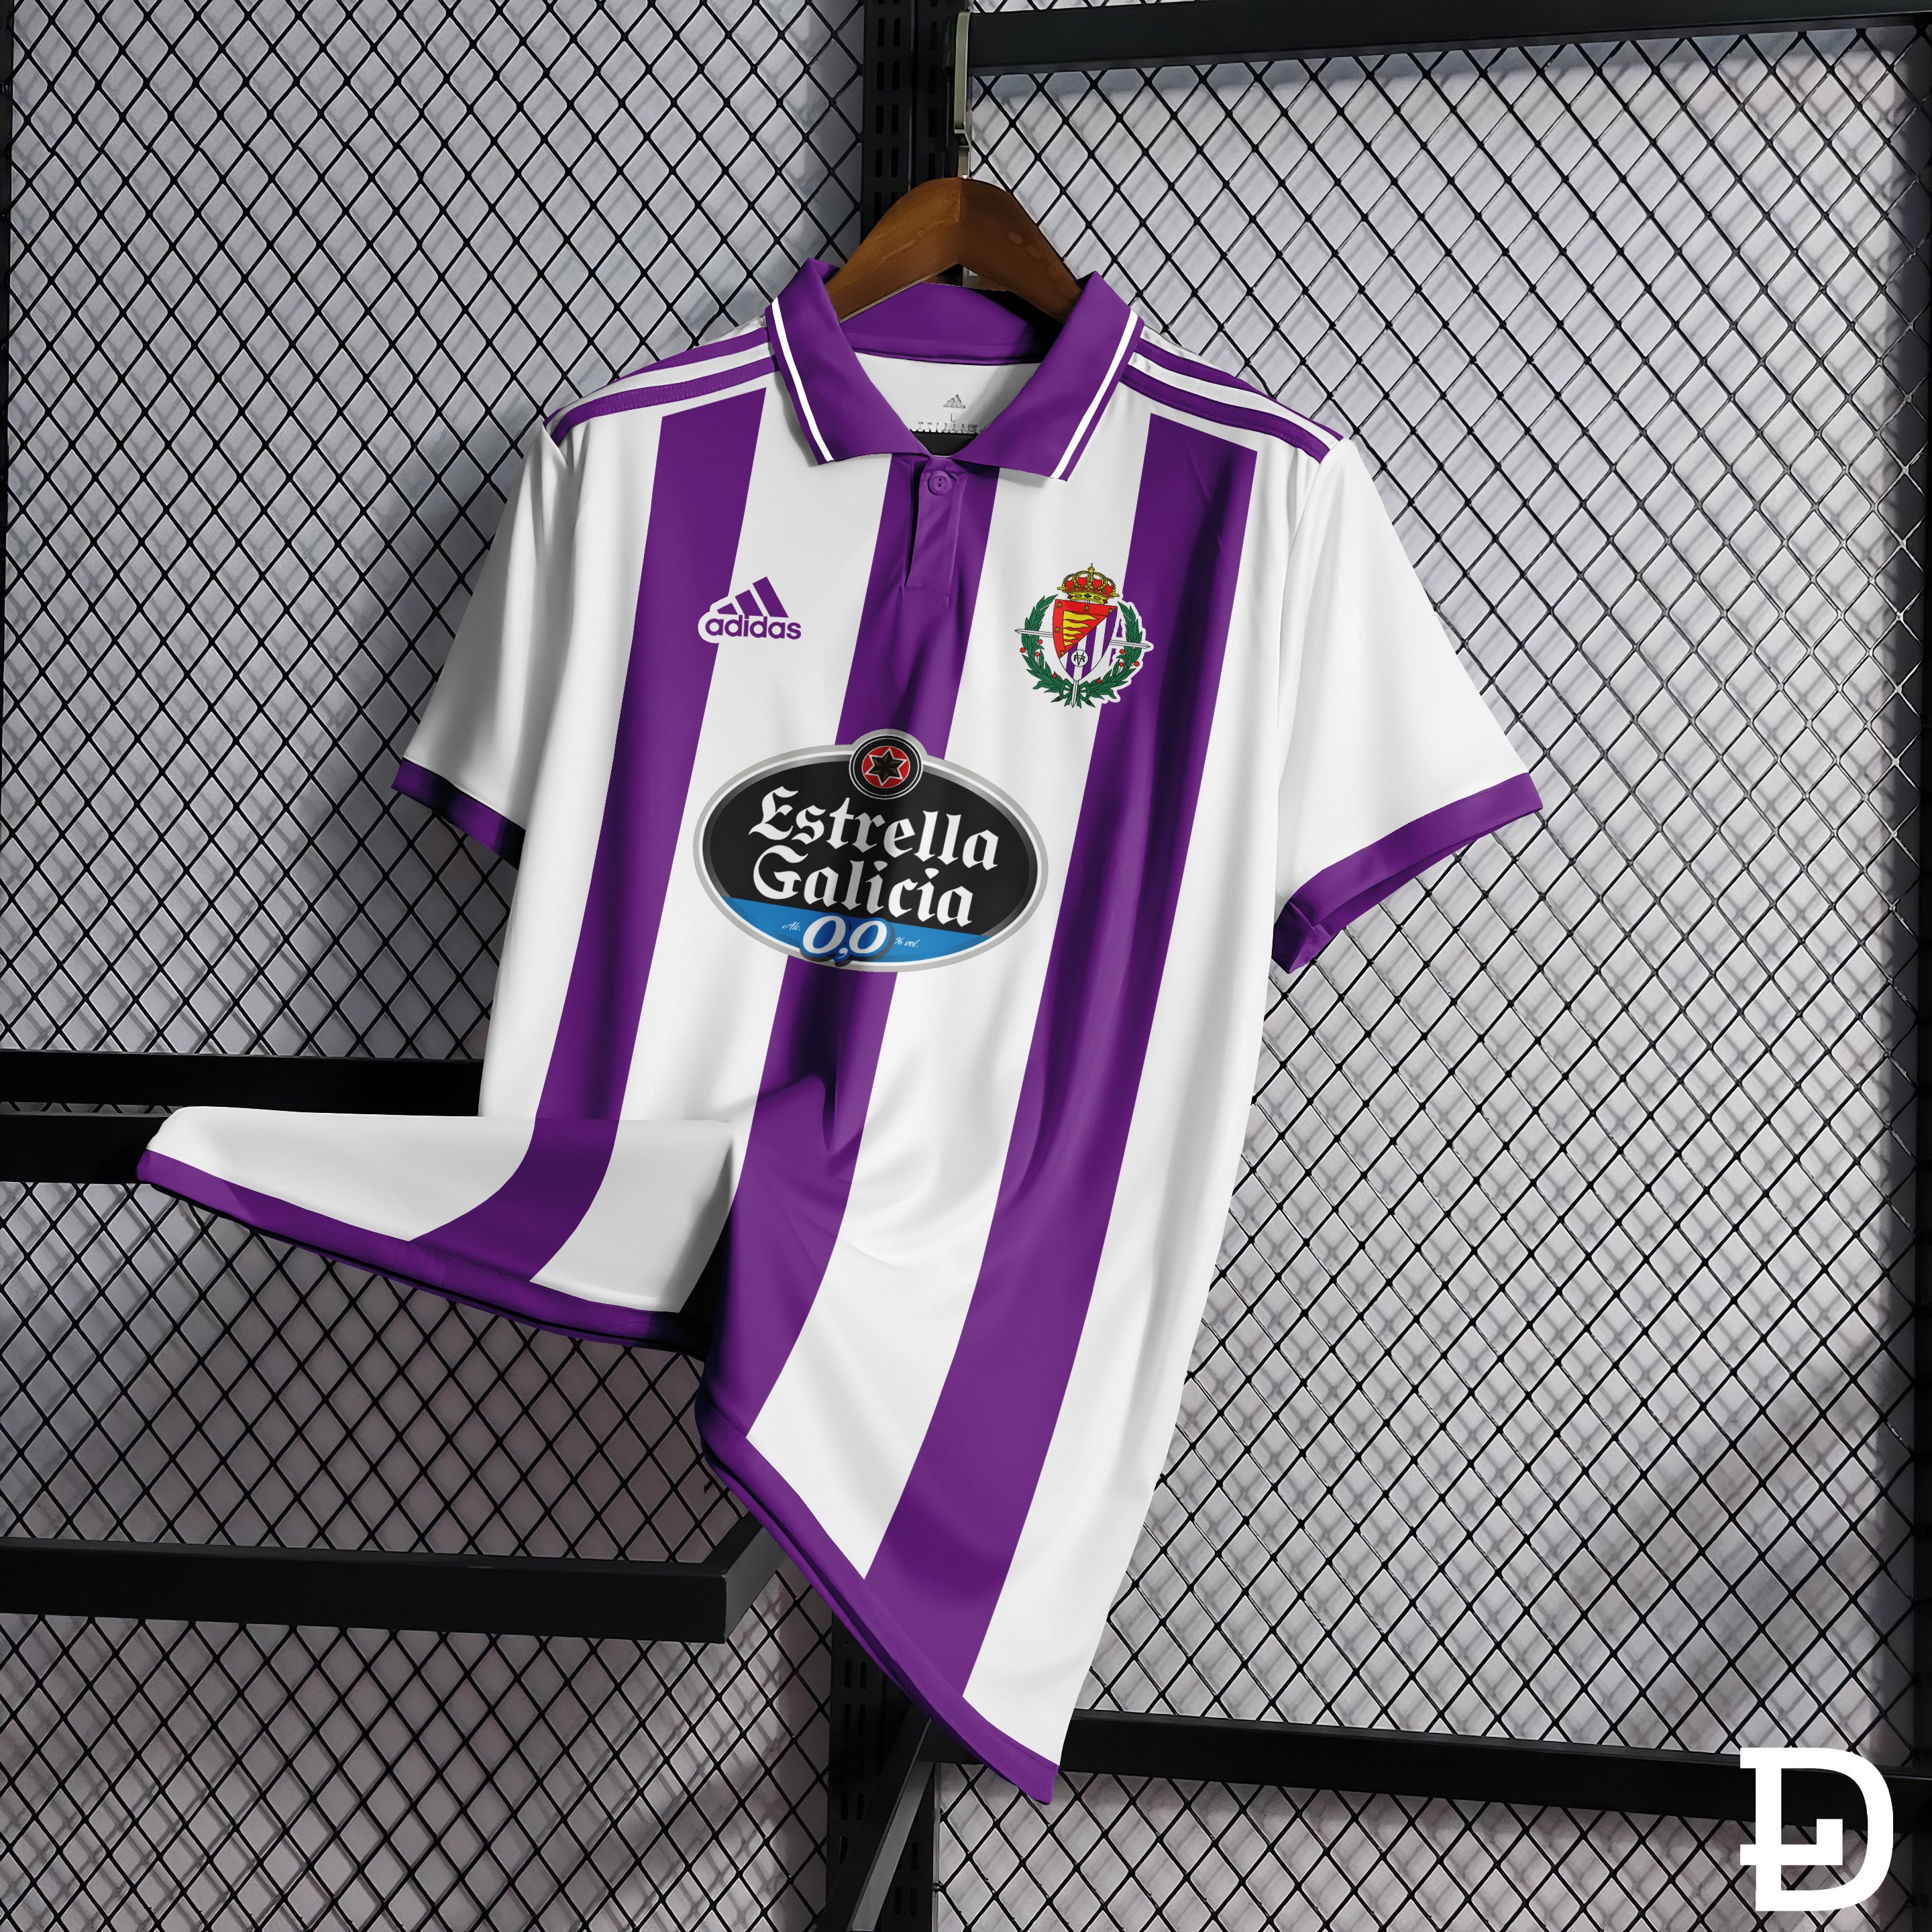 LautaDesign Twitter: "Real Valladolid CF Home Kit 2022/23 #RealValladolid #RVCF #Valladolid #pucela #adidas #AdidasFootball #Football / Twitter